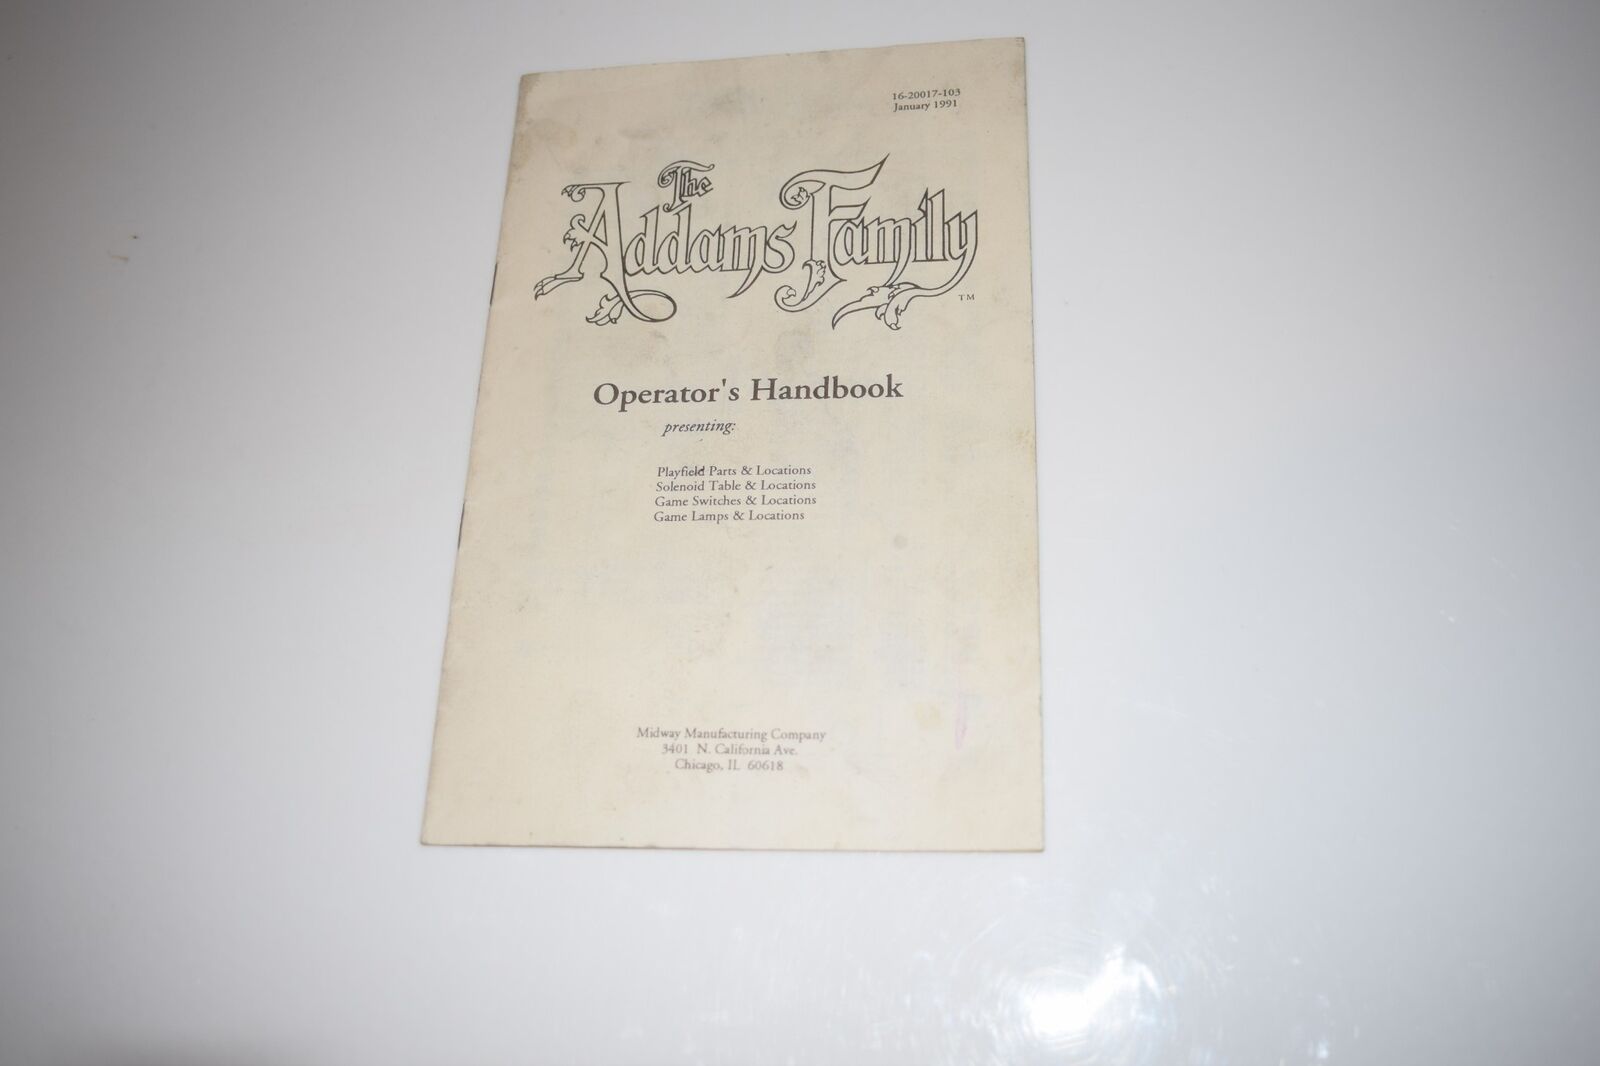 MIDWAY THE ADDAMS FAMILY OPERATOR'S HANDBOOK 16-20017-103 JAN 1991(BOOK790)